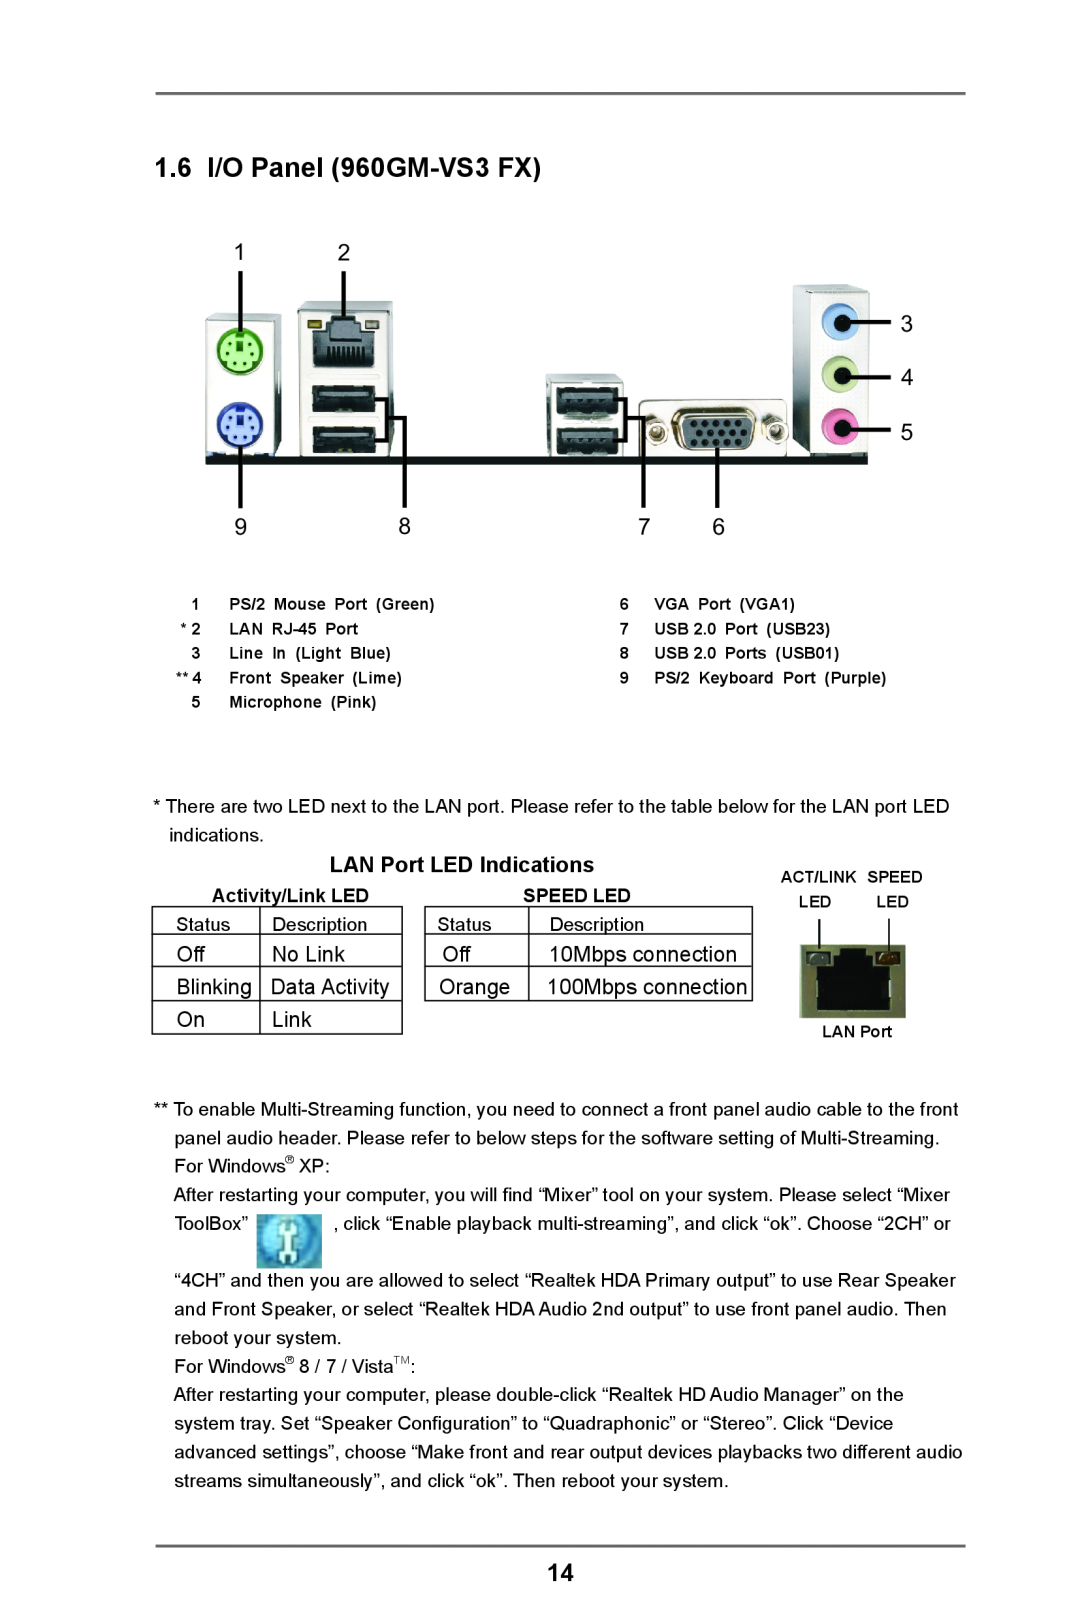 ASRock 960GM-VGS3 FX manual 1.6 I/O Panel 960GM-VS3 FX, LAN Port LED Indications 